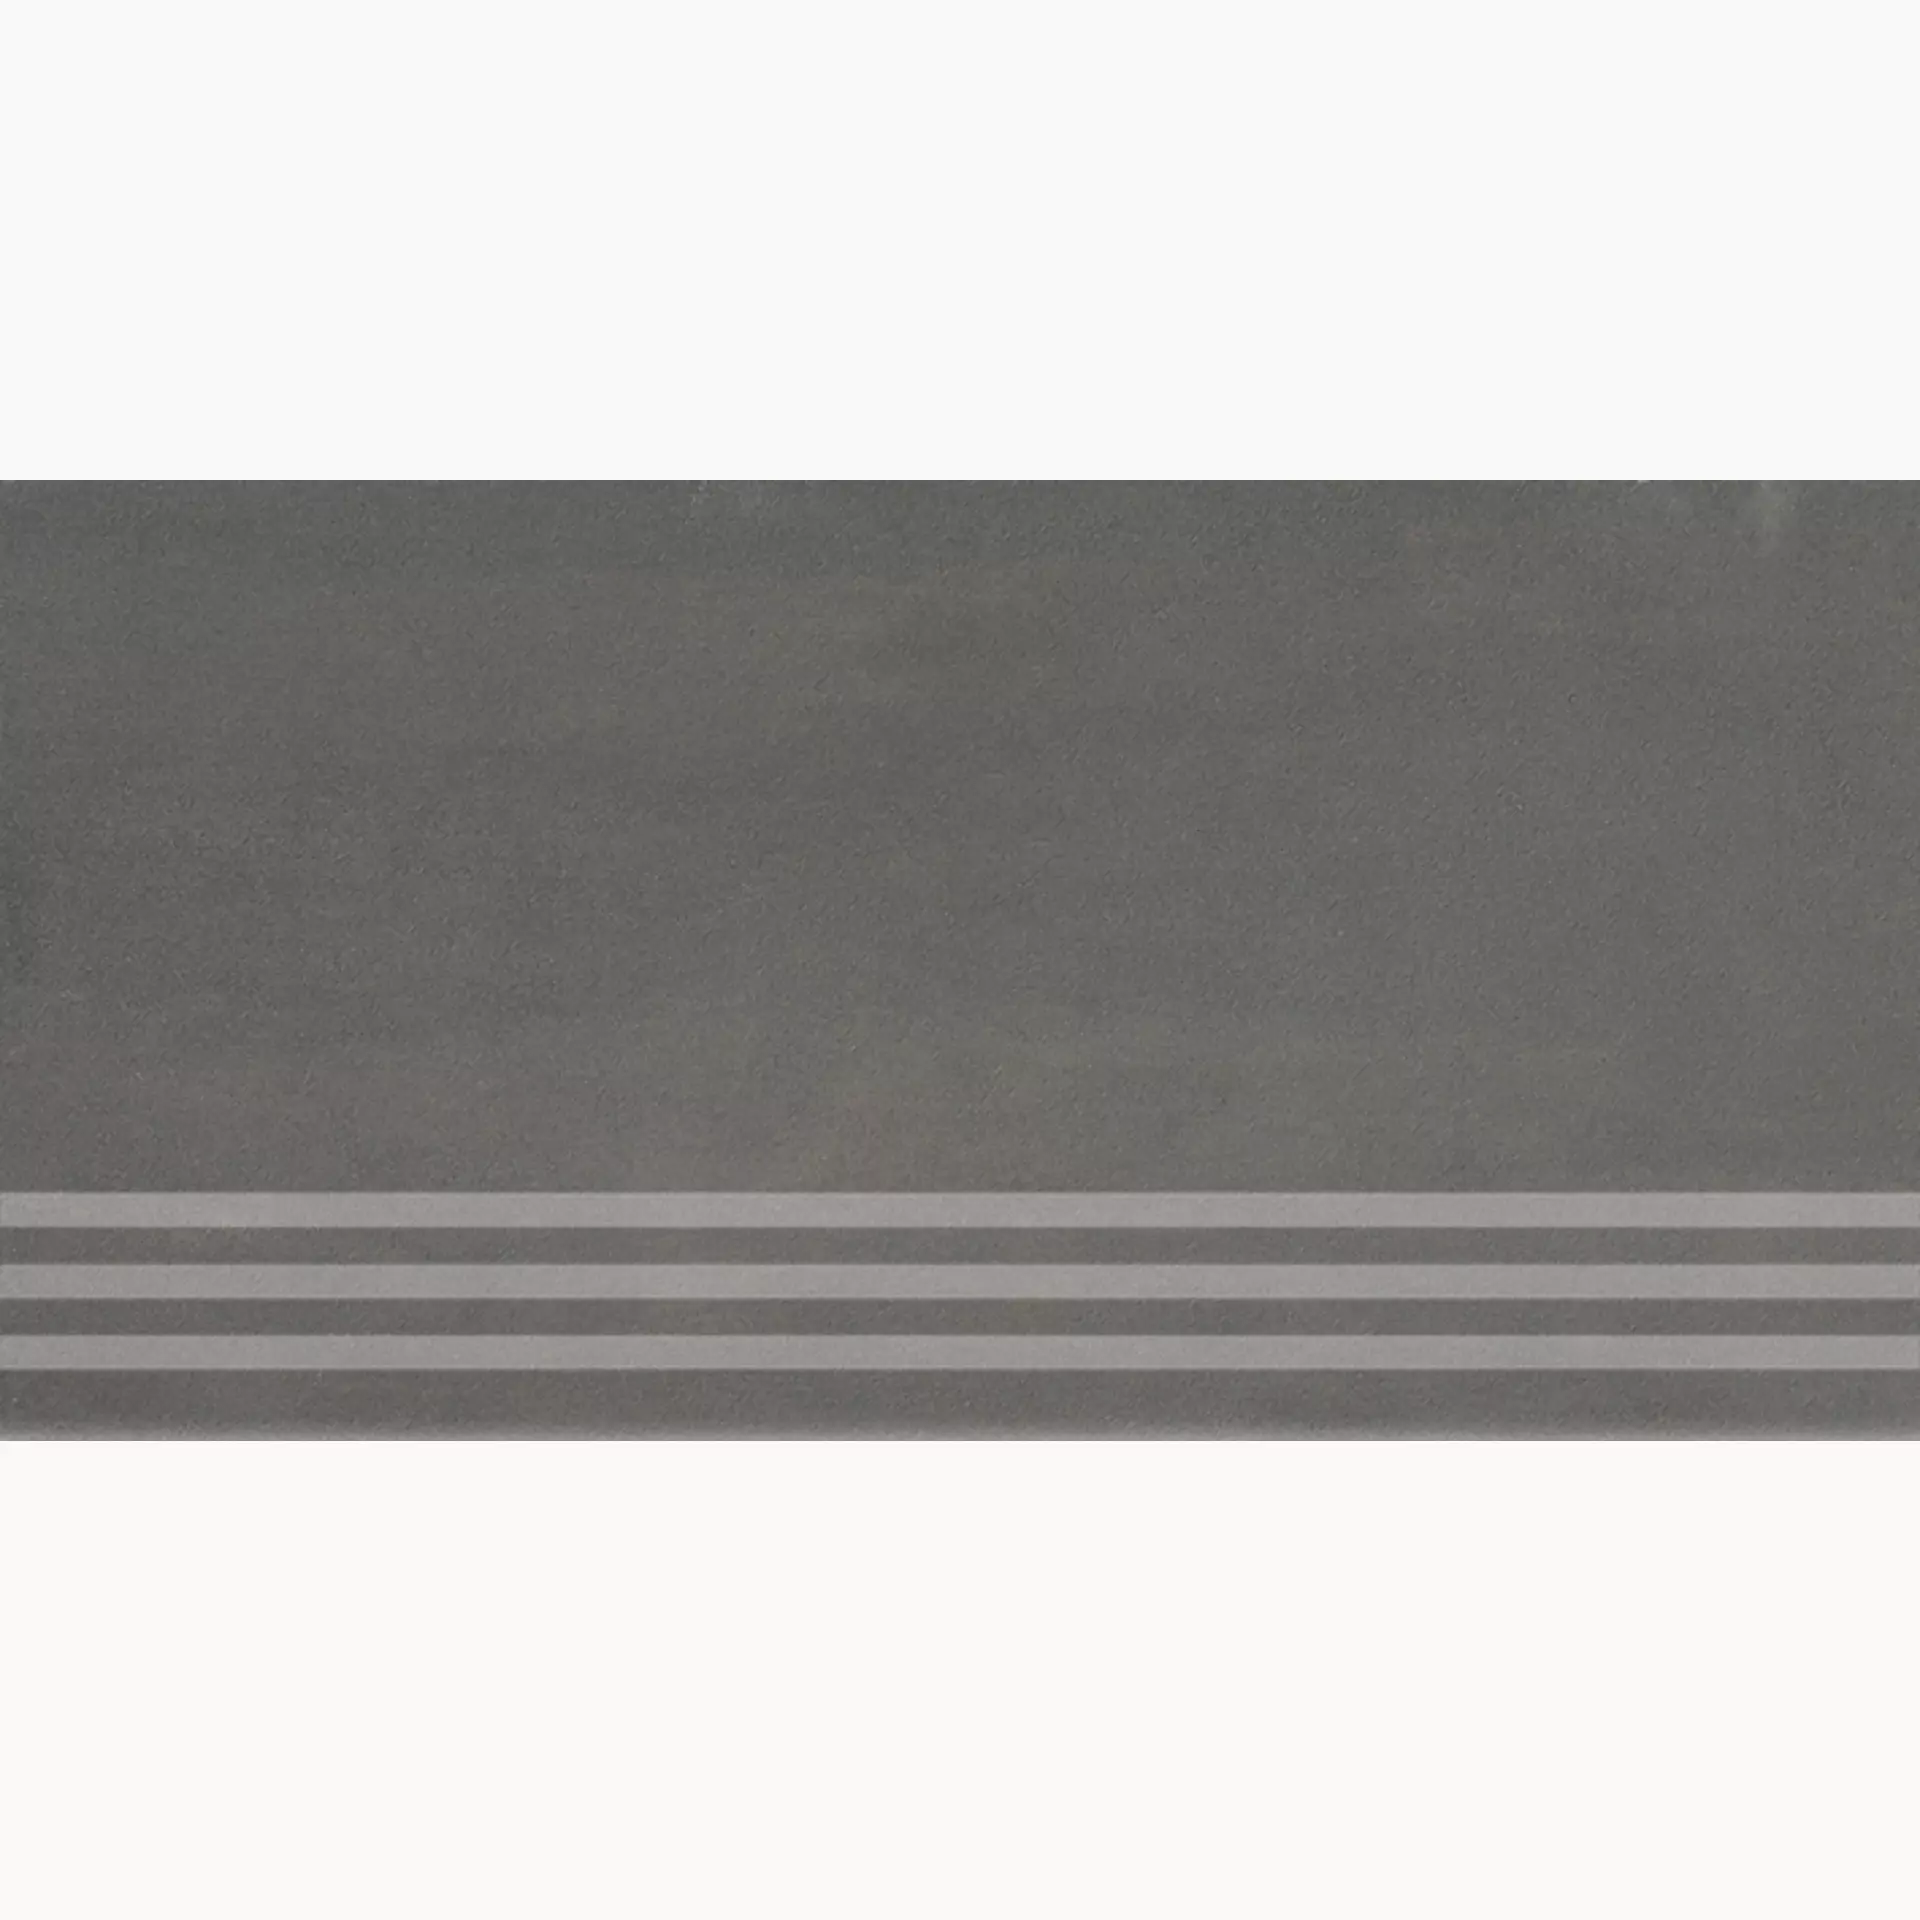 Villeroy & Boch Unit Four Dark Grey Matt Stair plate 2874-CT62 30x60cm rectified 10mm